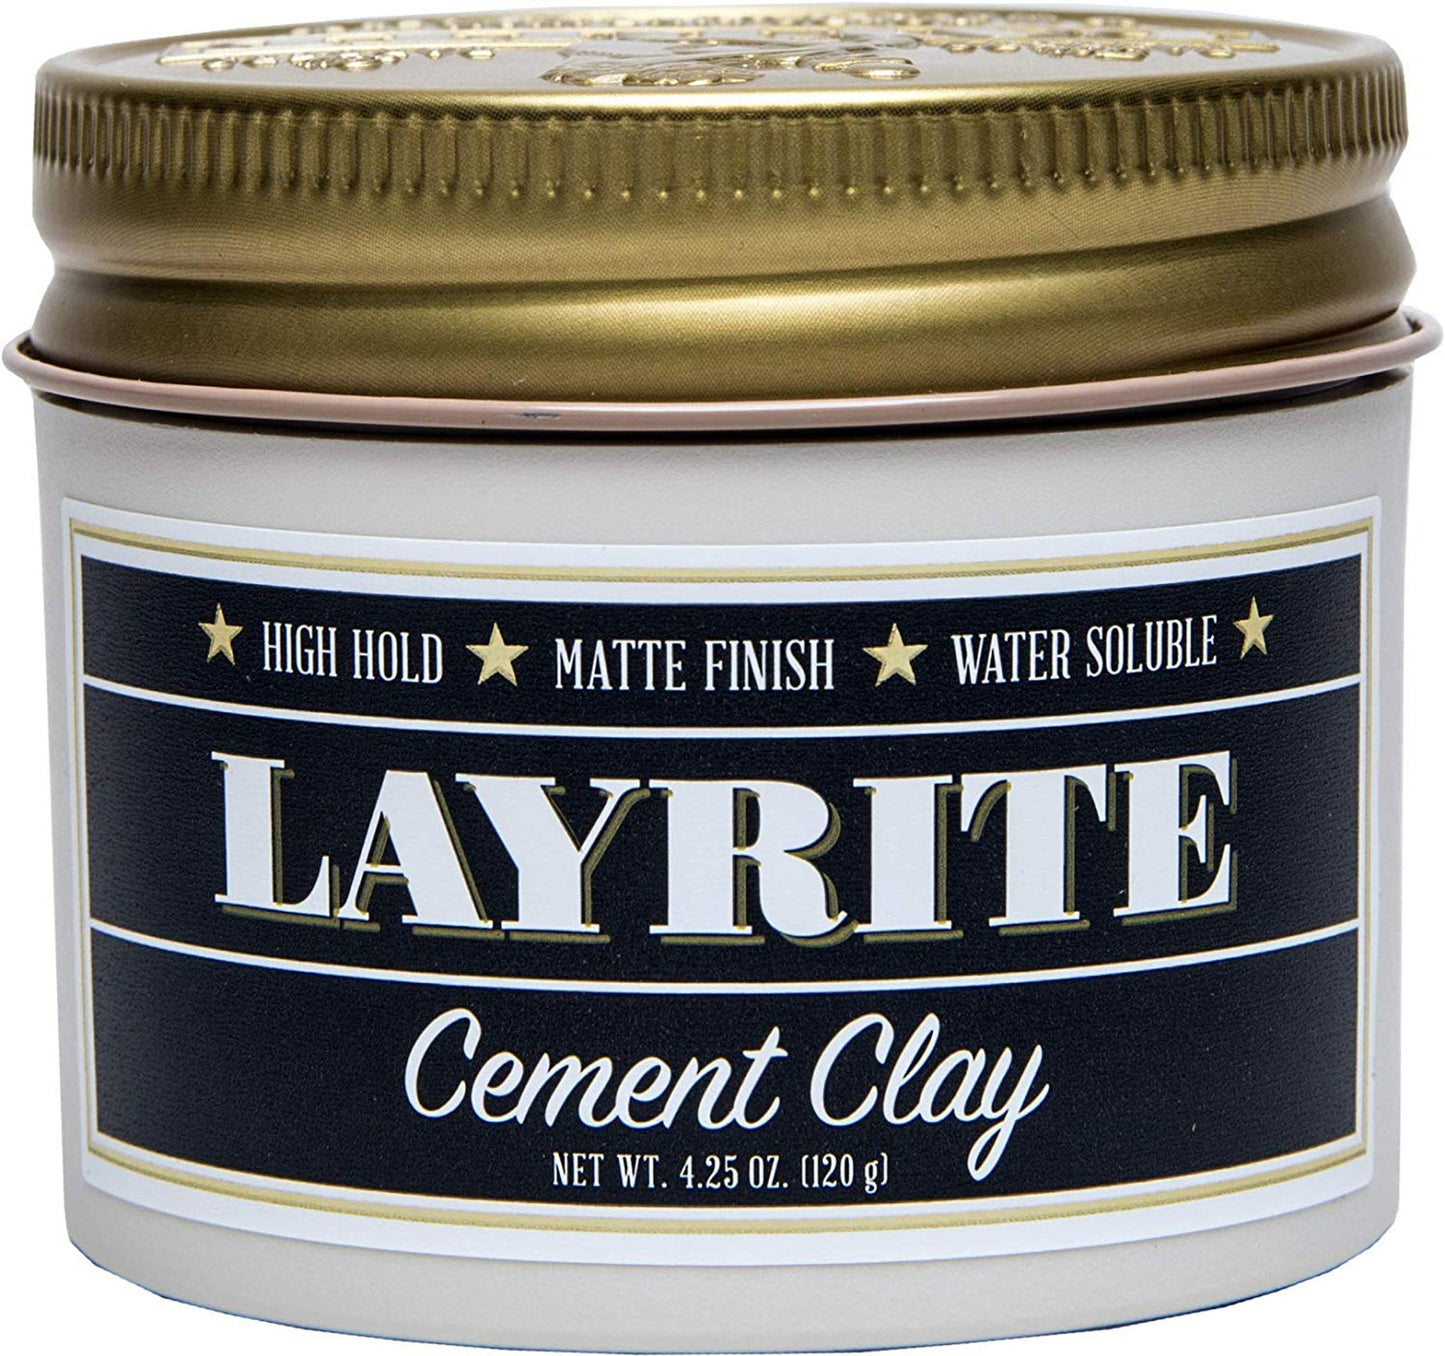 Layrite Cement Clay - 4.25oz